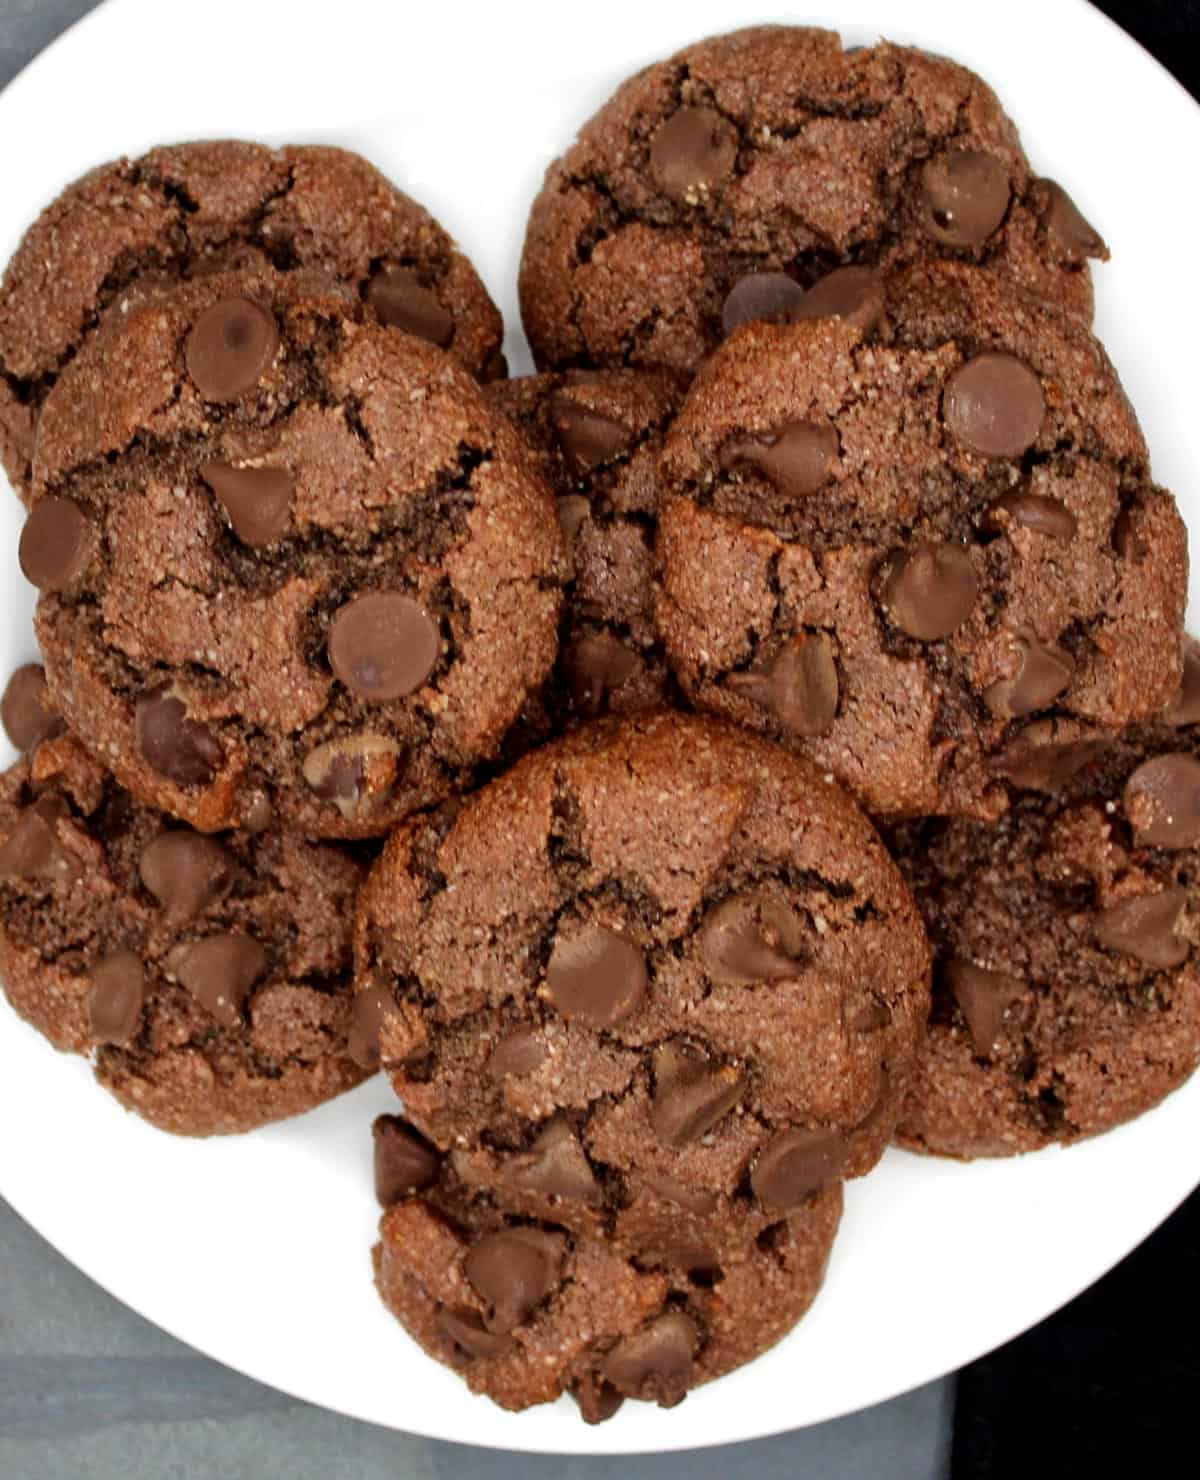 Vegan chocolate chip almond flour cookies on white plate.